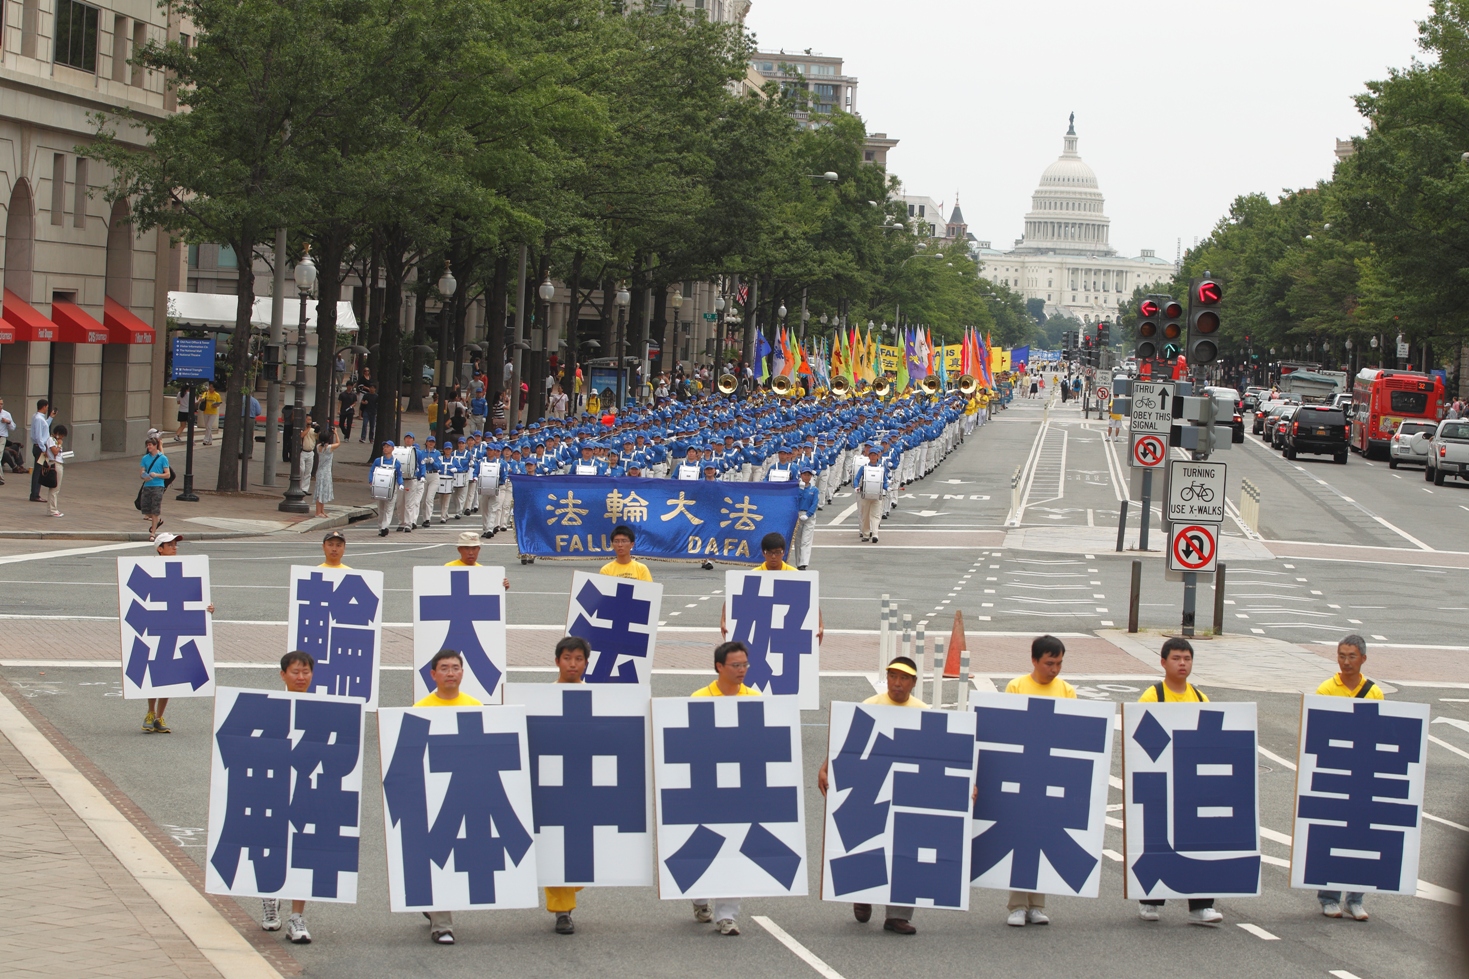 http://en.minghui.org/emh/article_images/2012-7-14-cmh-dc-parade-02.jpg